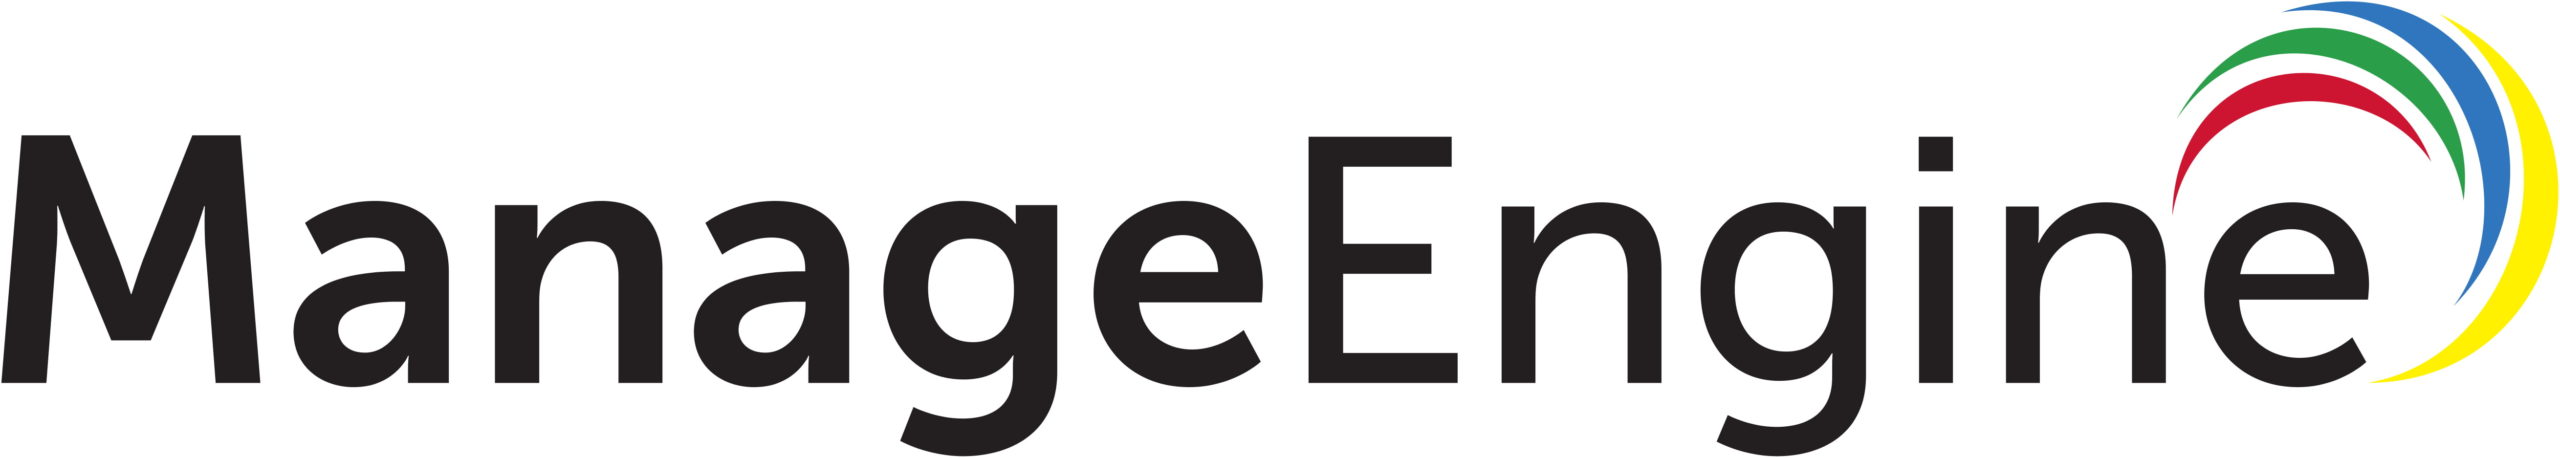 ManageEngine Logo - White BG